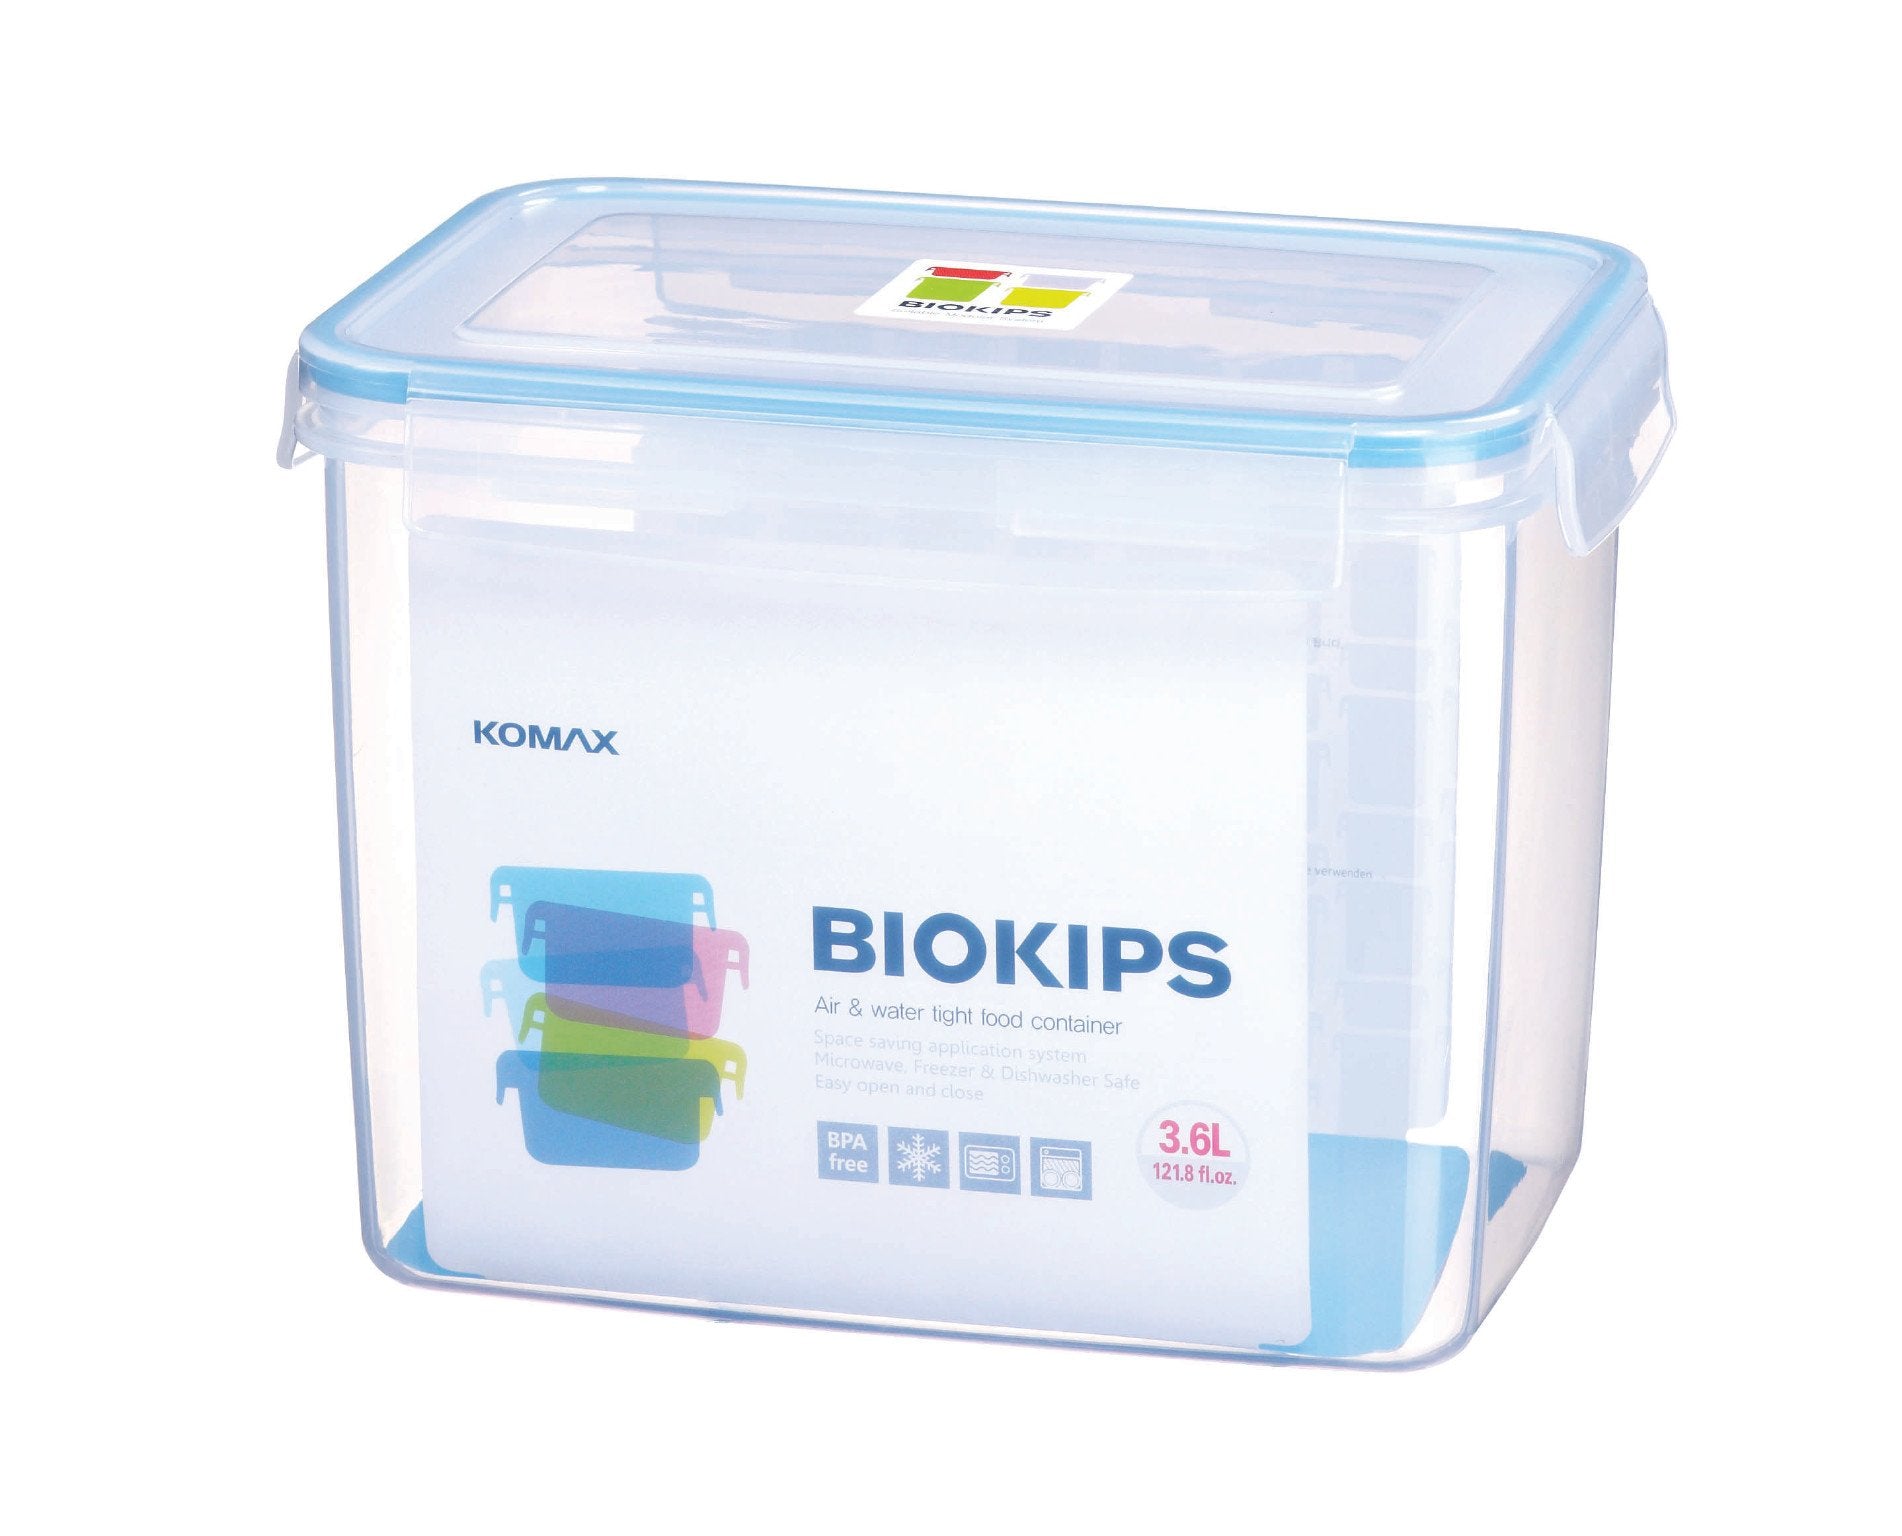 Komax Biokips Rectangular Food Storage Container, 3.6 L